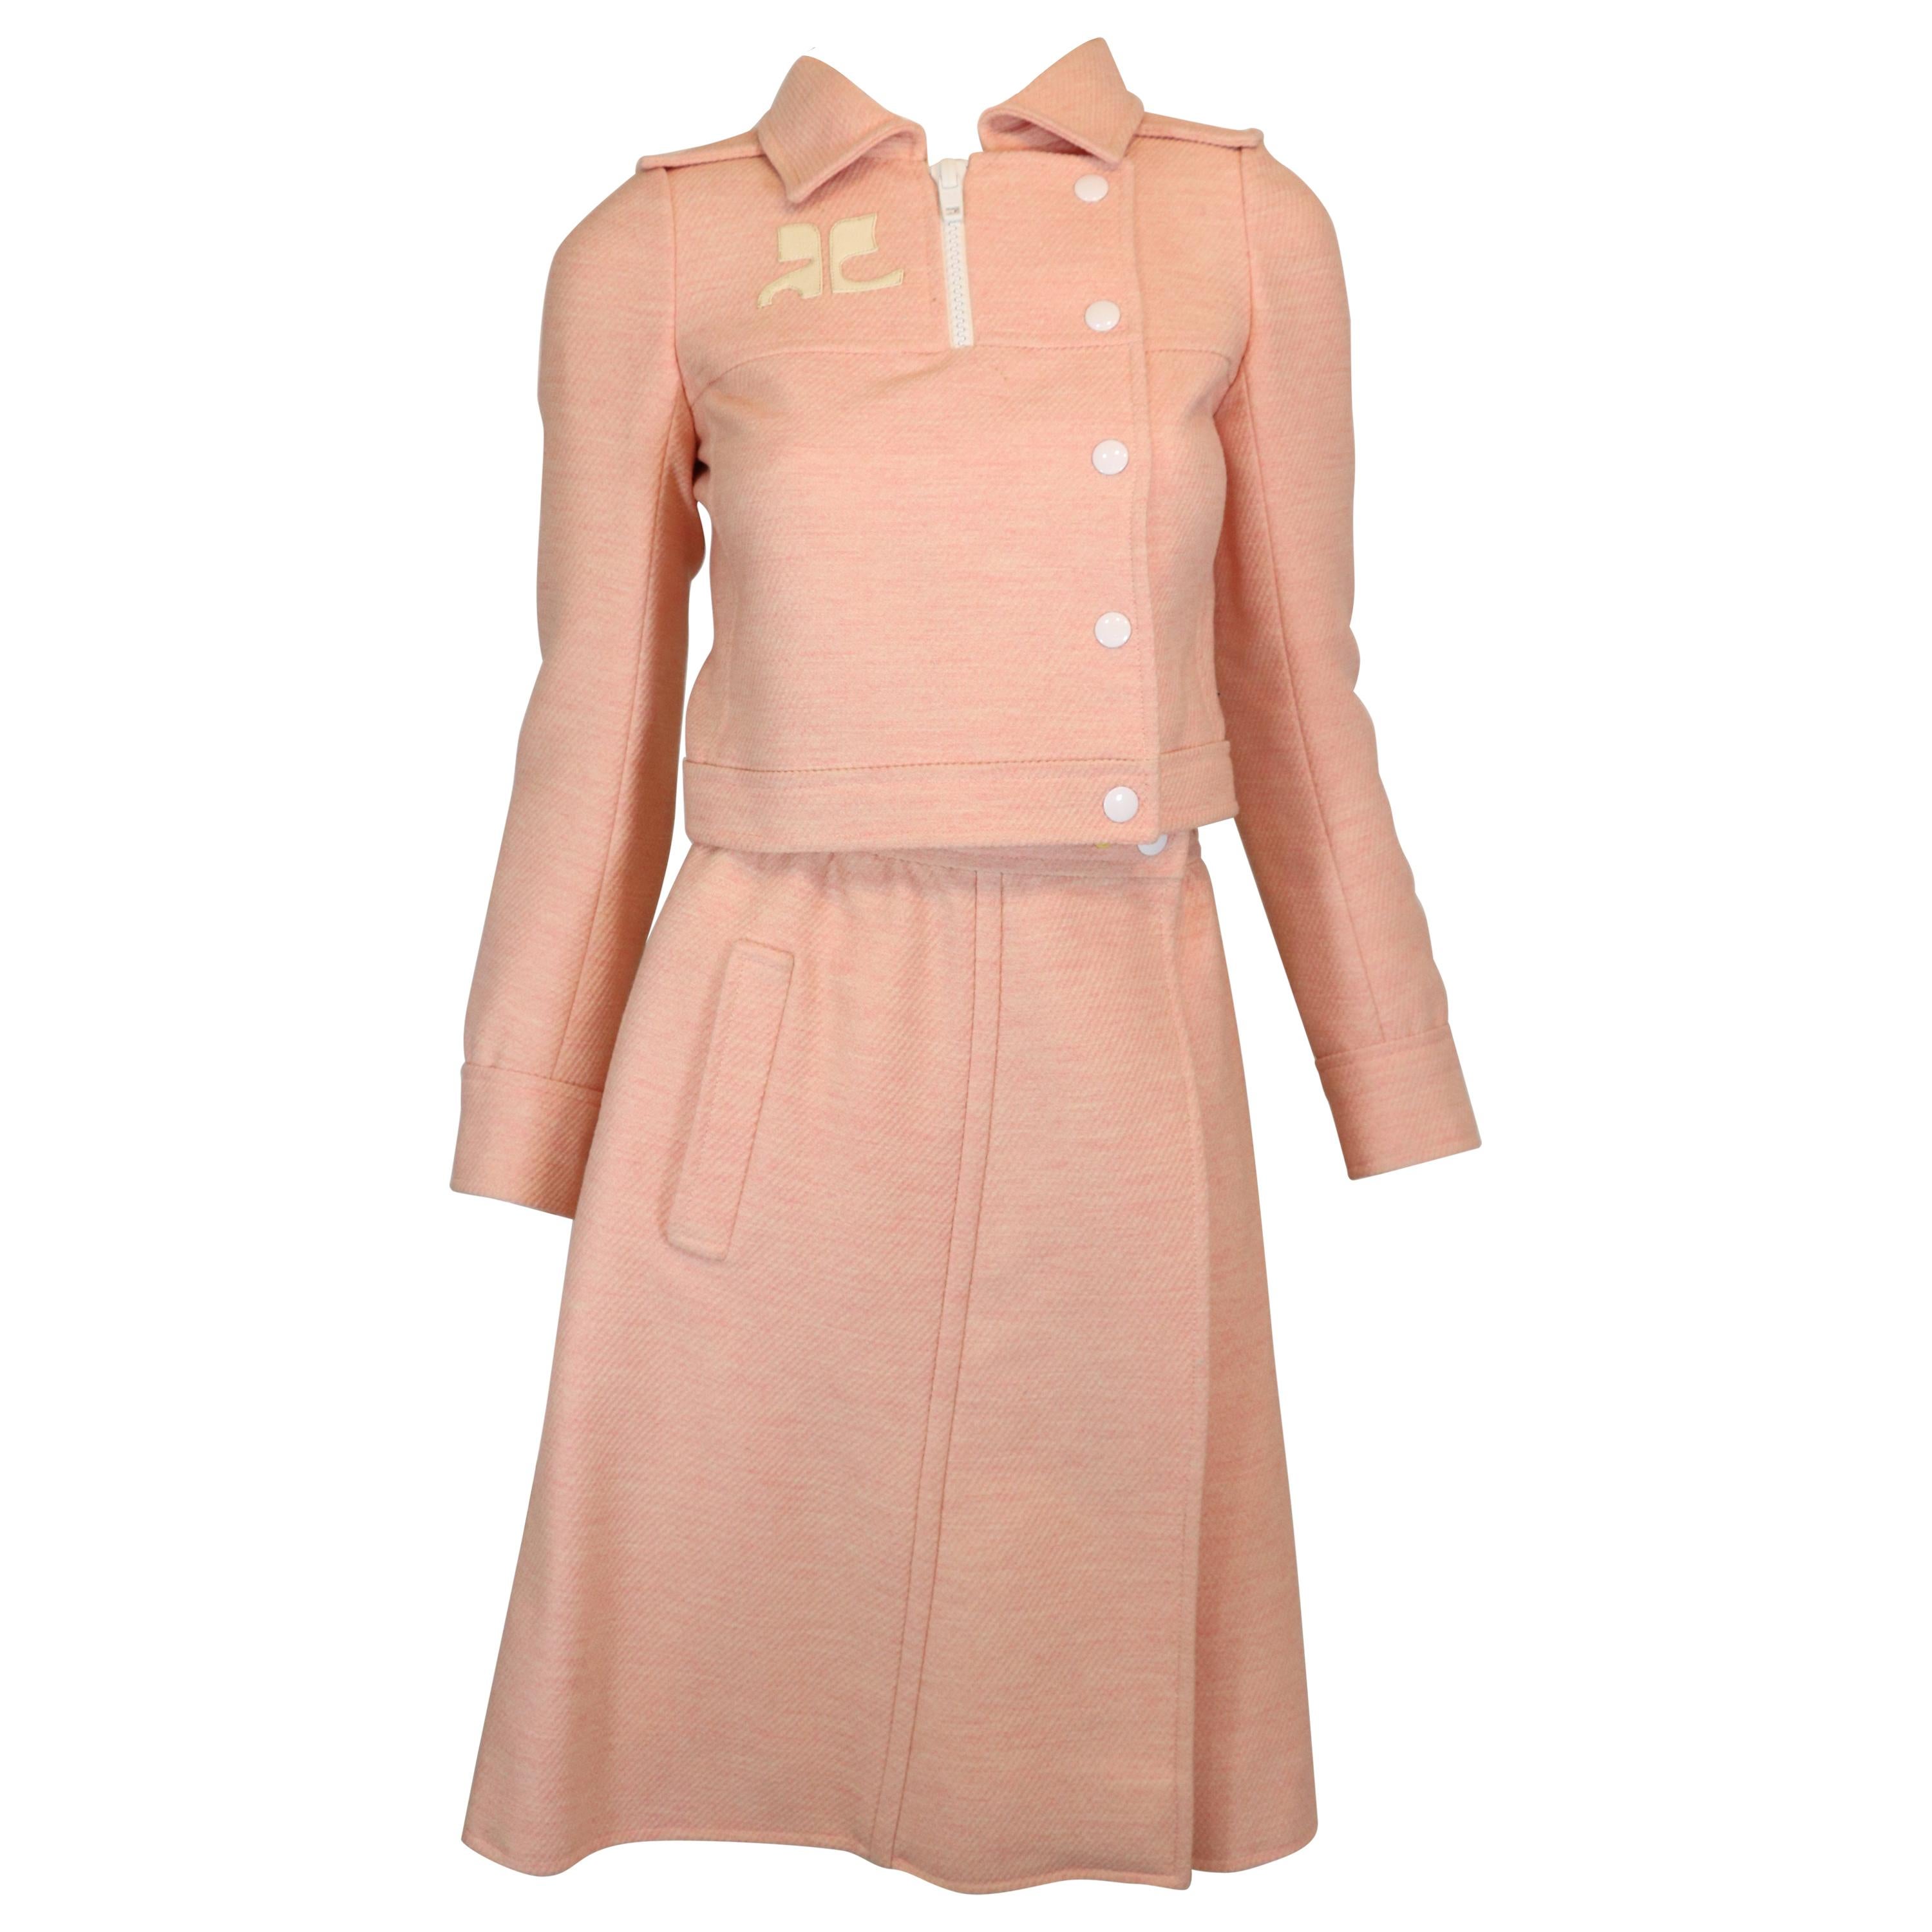 Andre Courreges numbered Pink Wool Jacket Skirt Set 1970’s